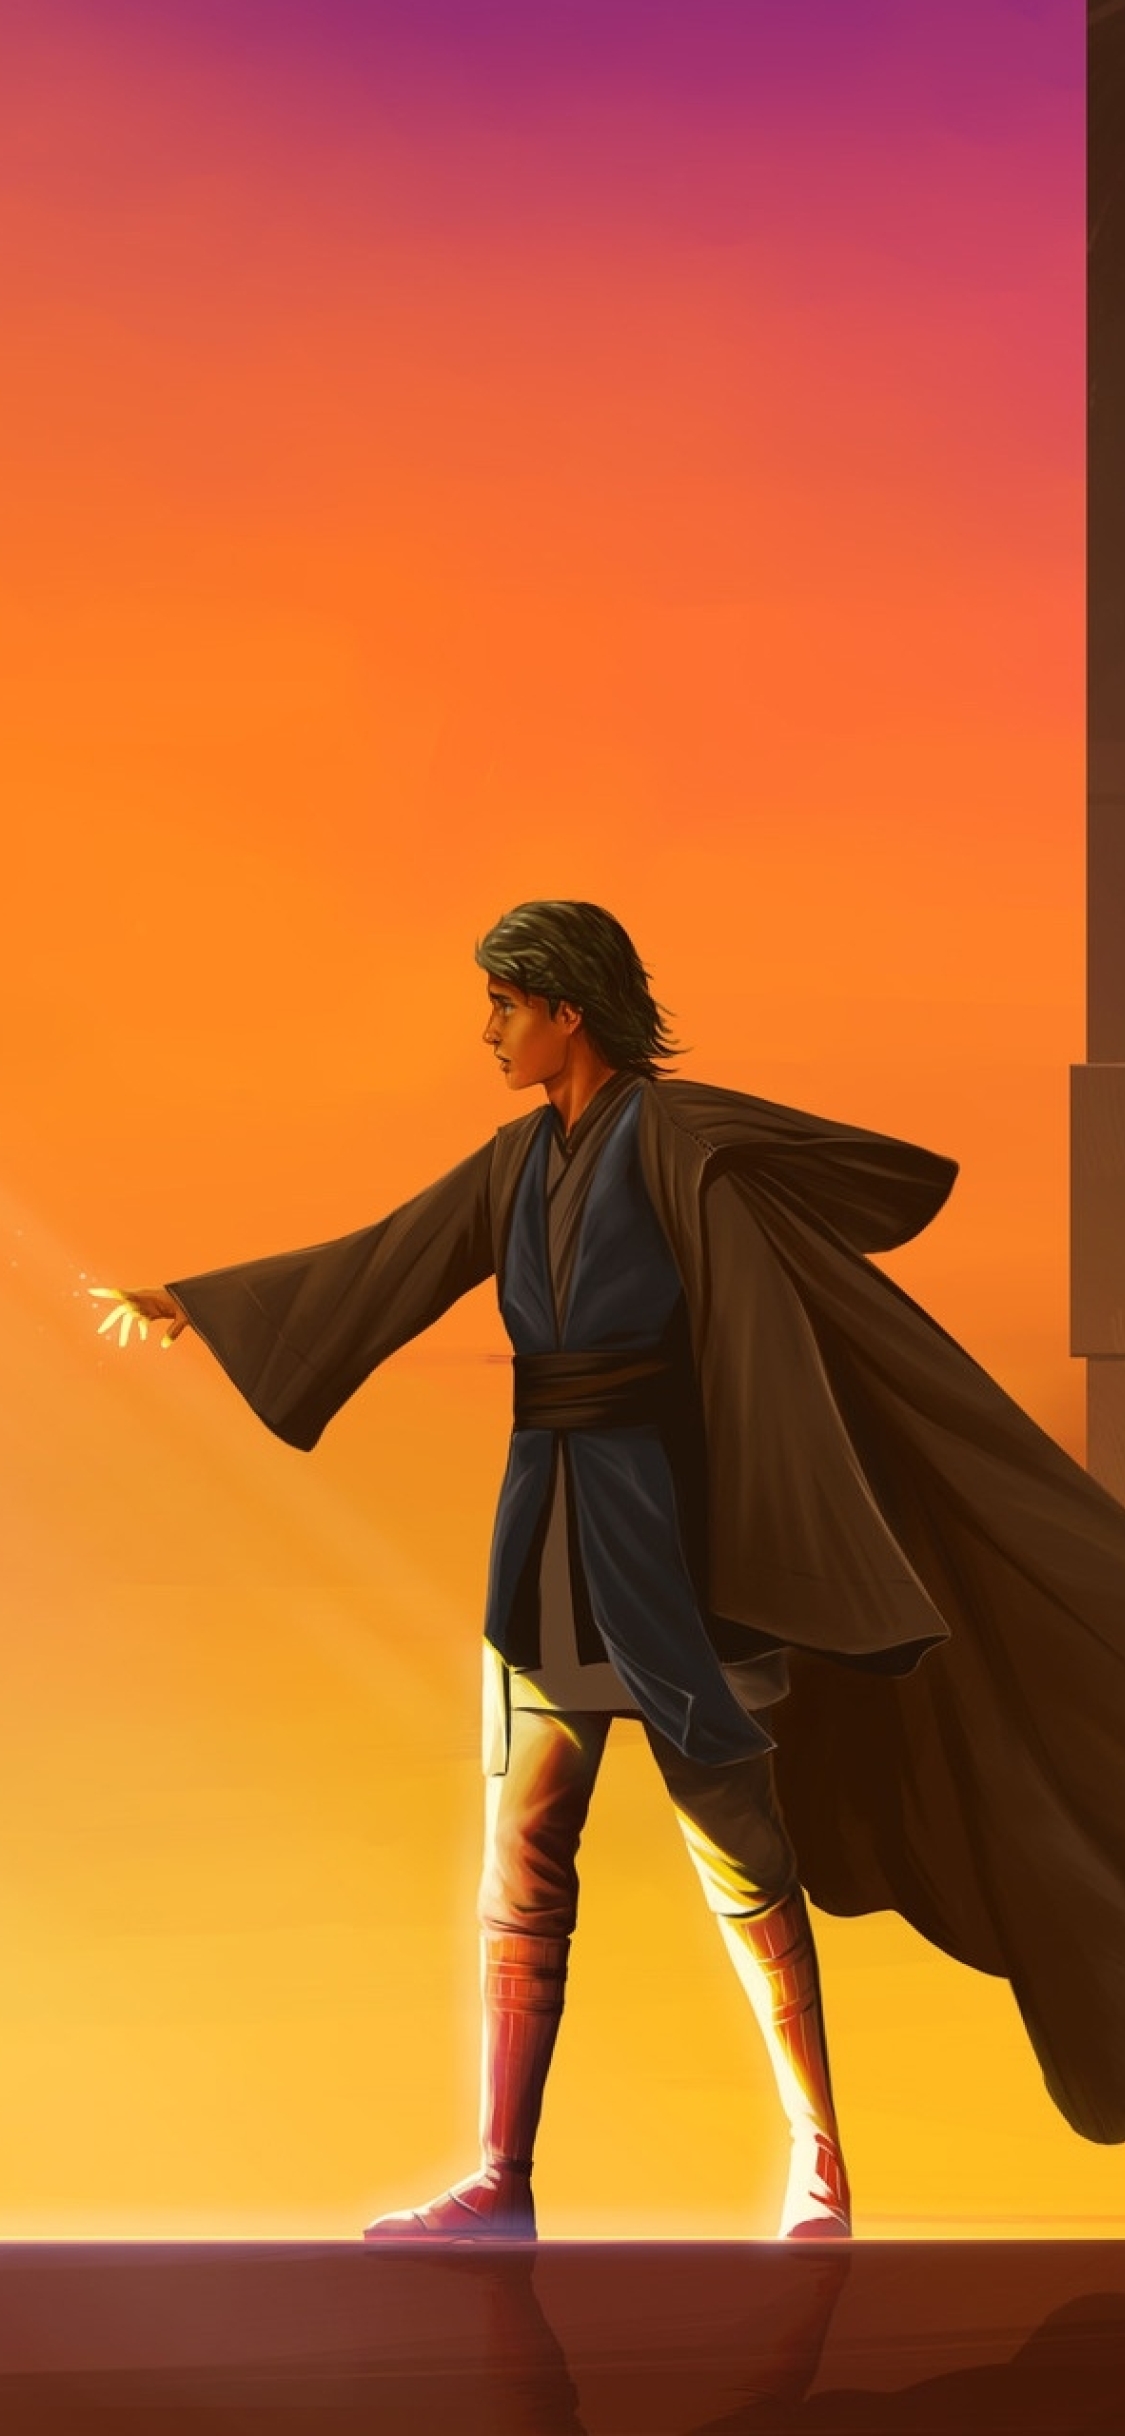 Star Wars  Anakin Skywalker Wallpaper Download  MobCup